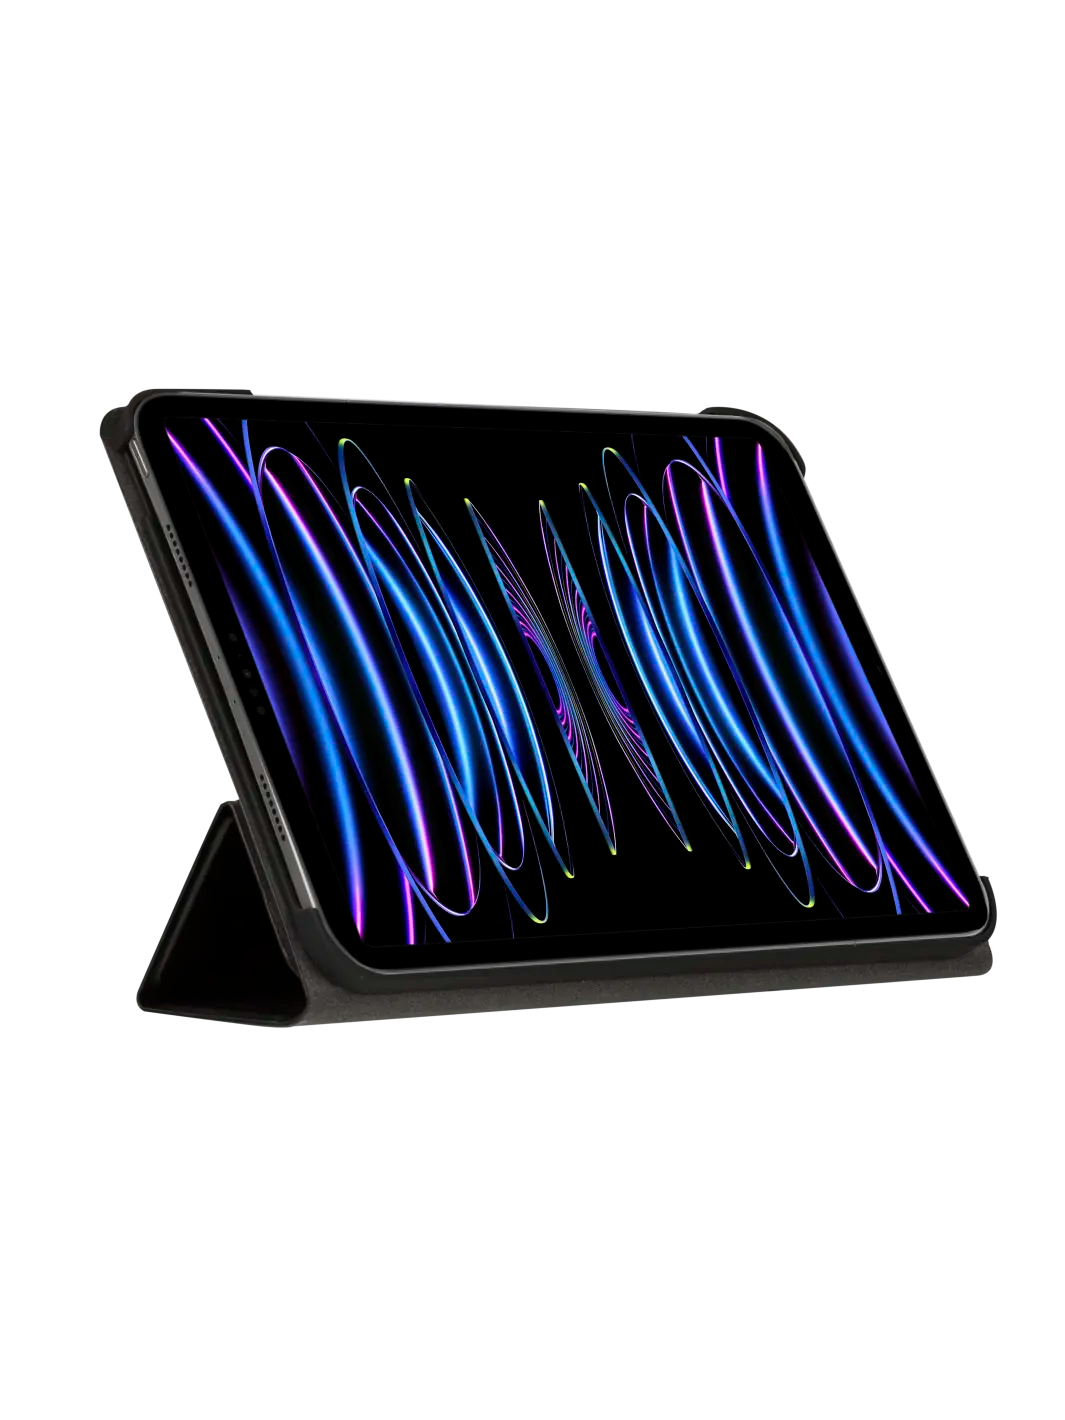 Risskov iPad case Black iPad 10.9" (10th Gen) iPad Cases